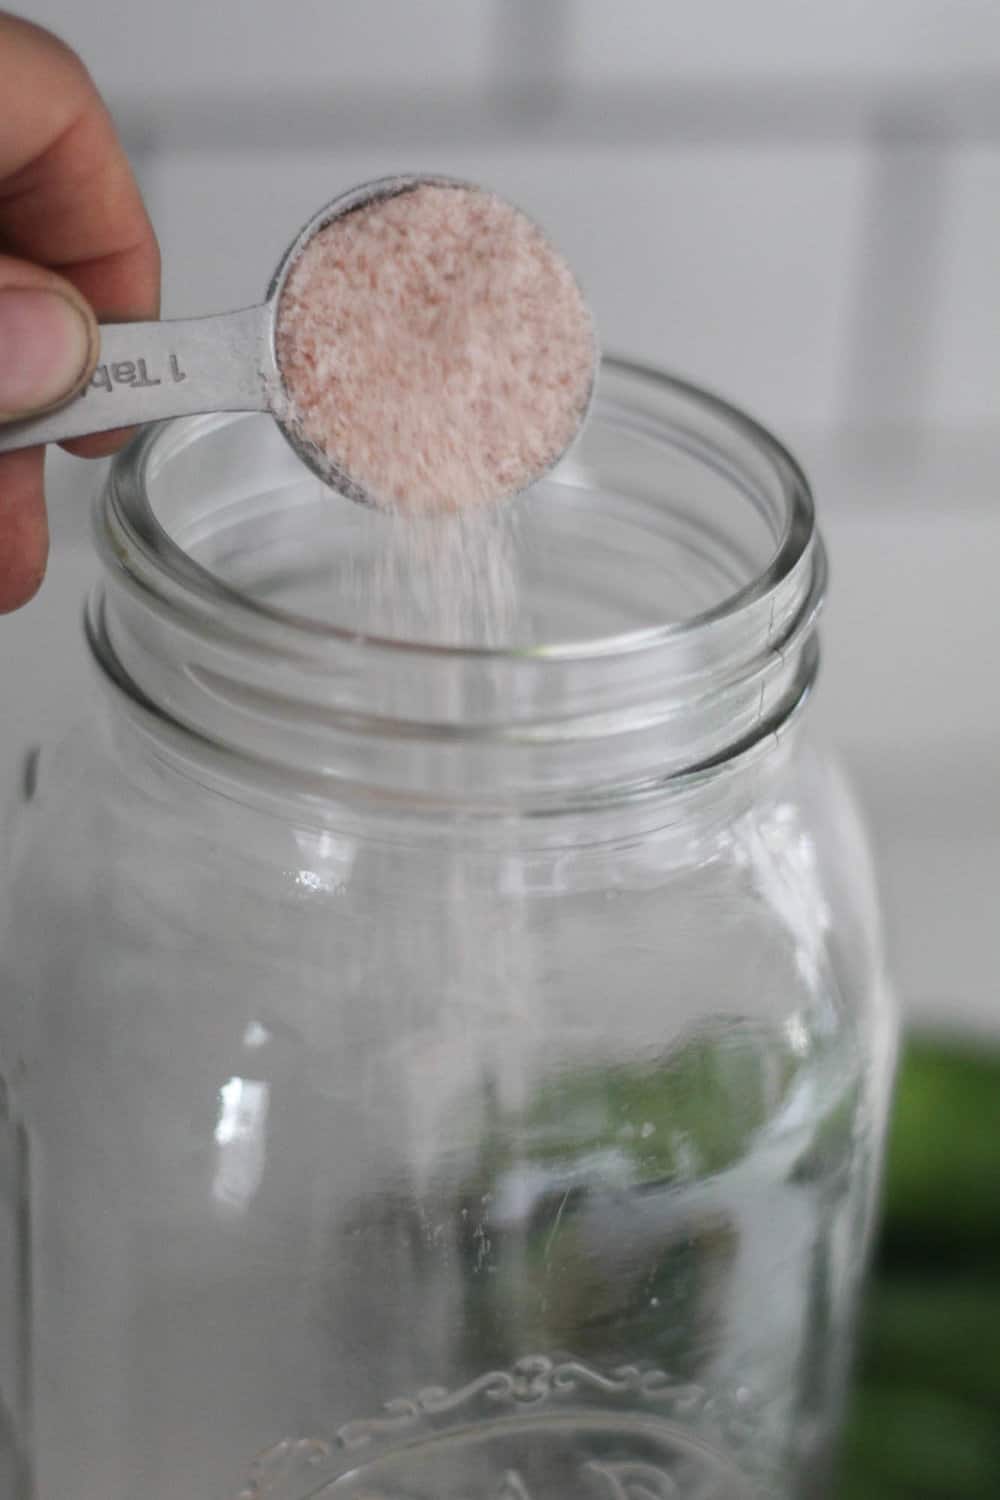 adding pink Himalayan salt into a mason jar to make fermented pickles